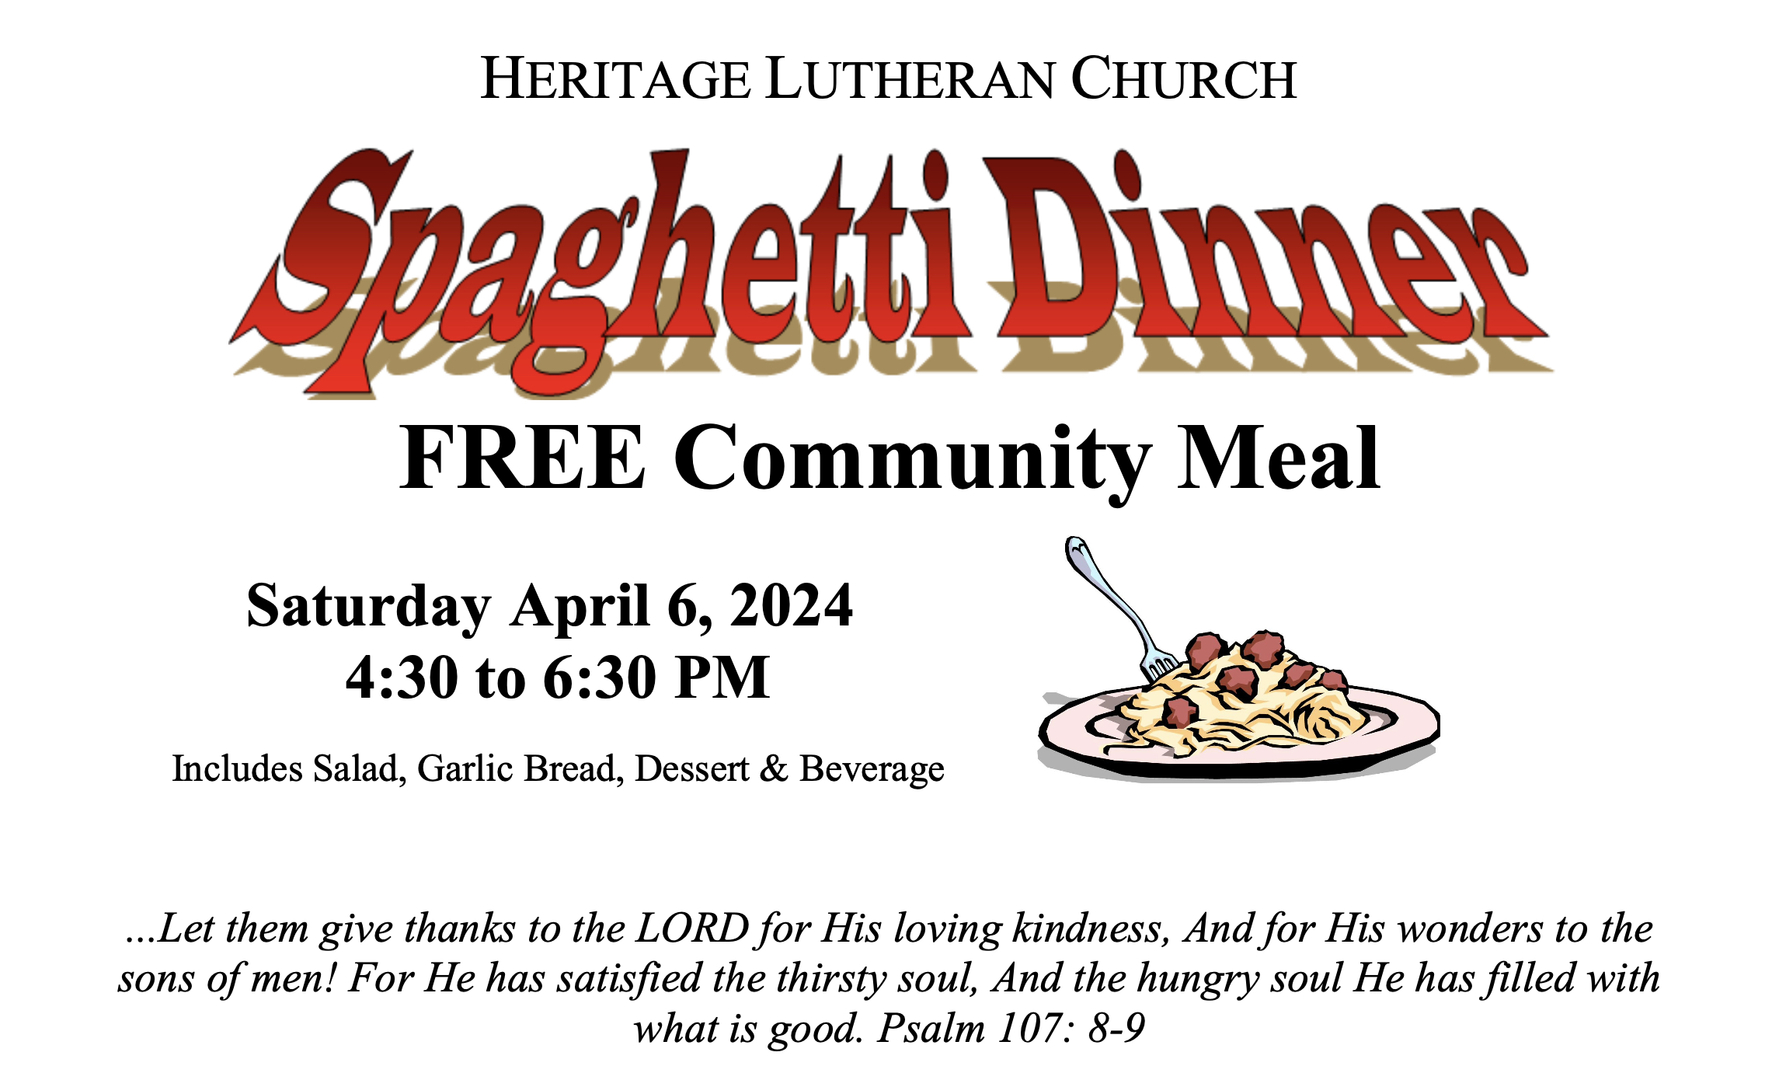 Heritage Lutheran Church - Spaghetti Dinner, Valparaiso, Indiana, United States